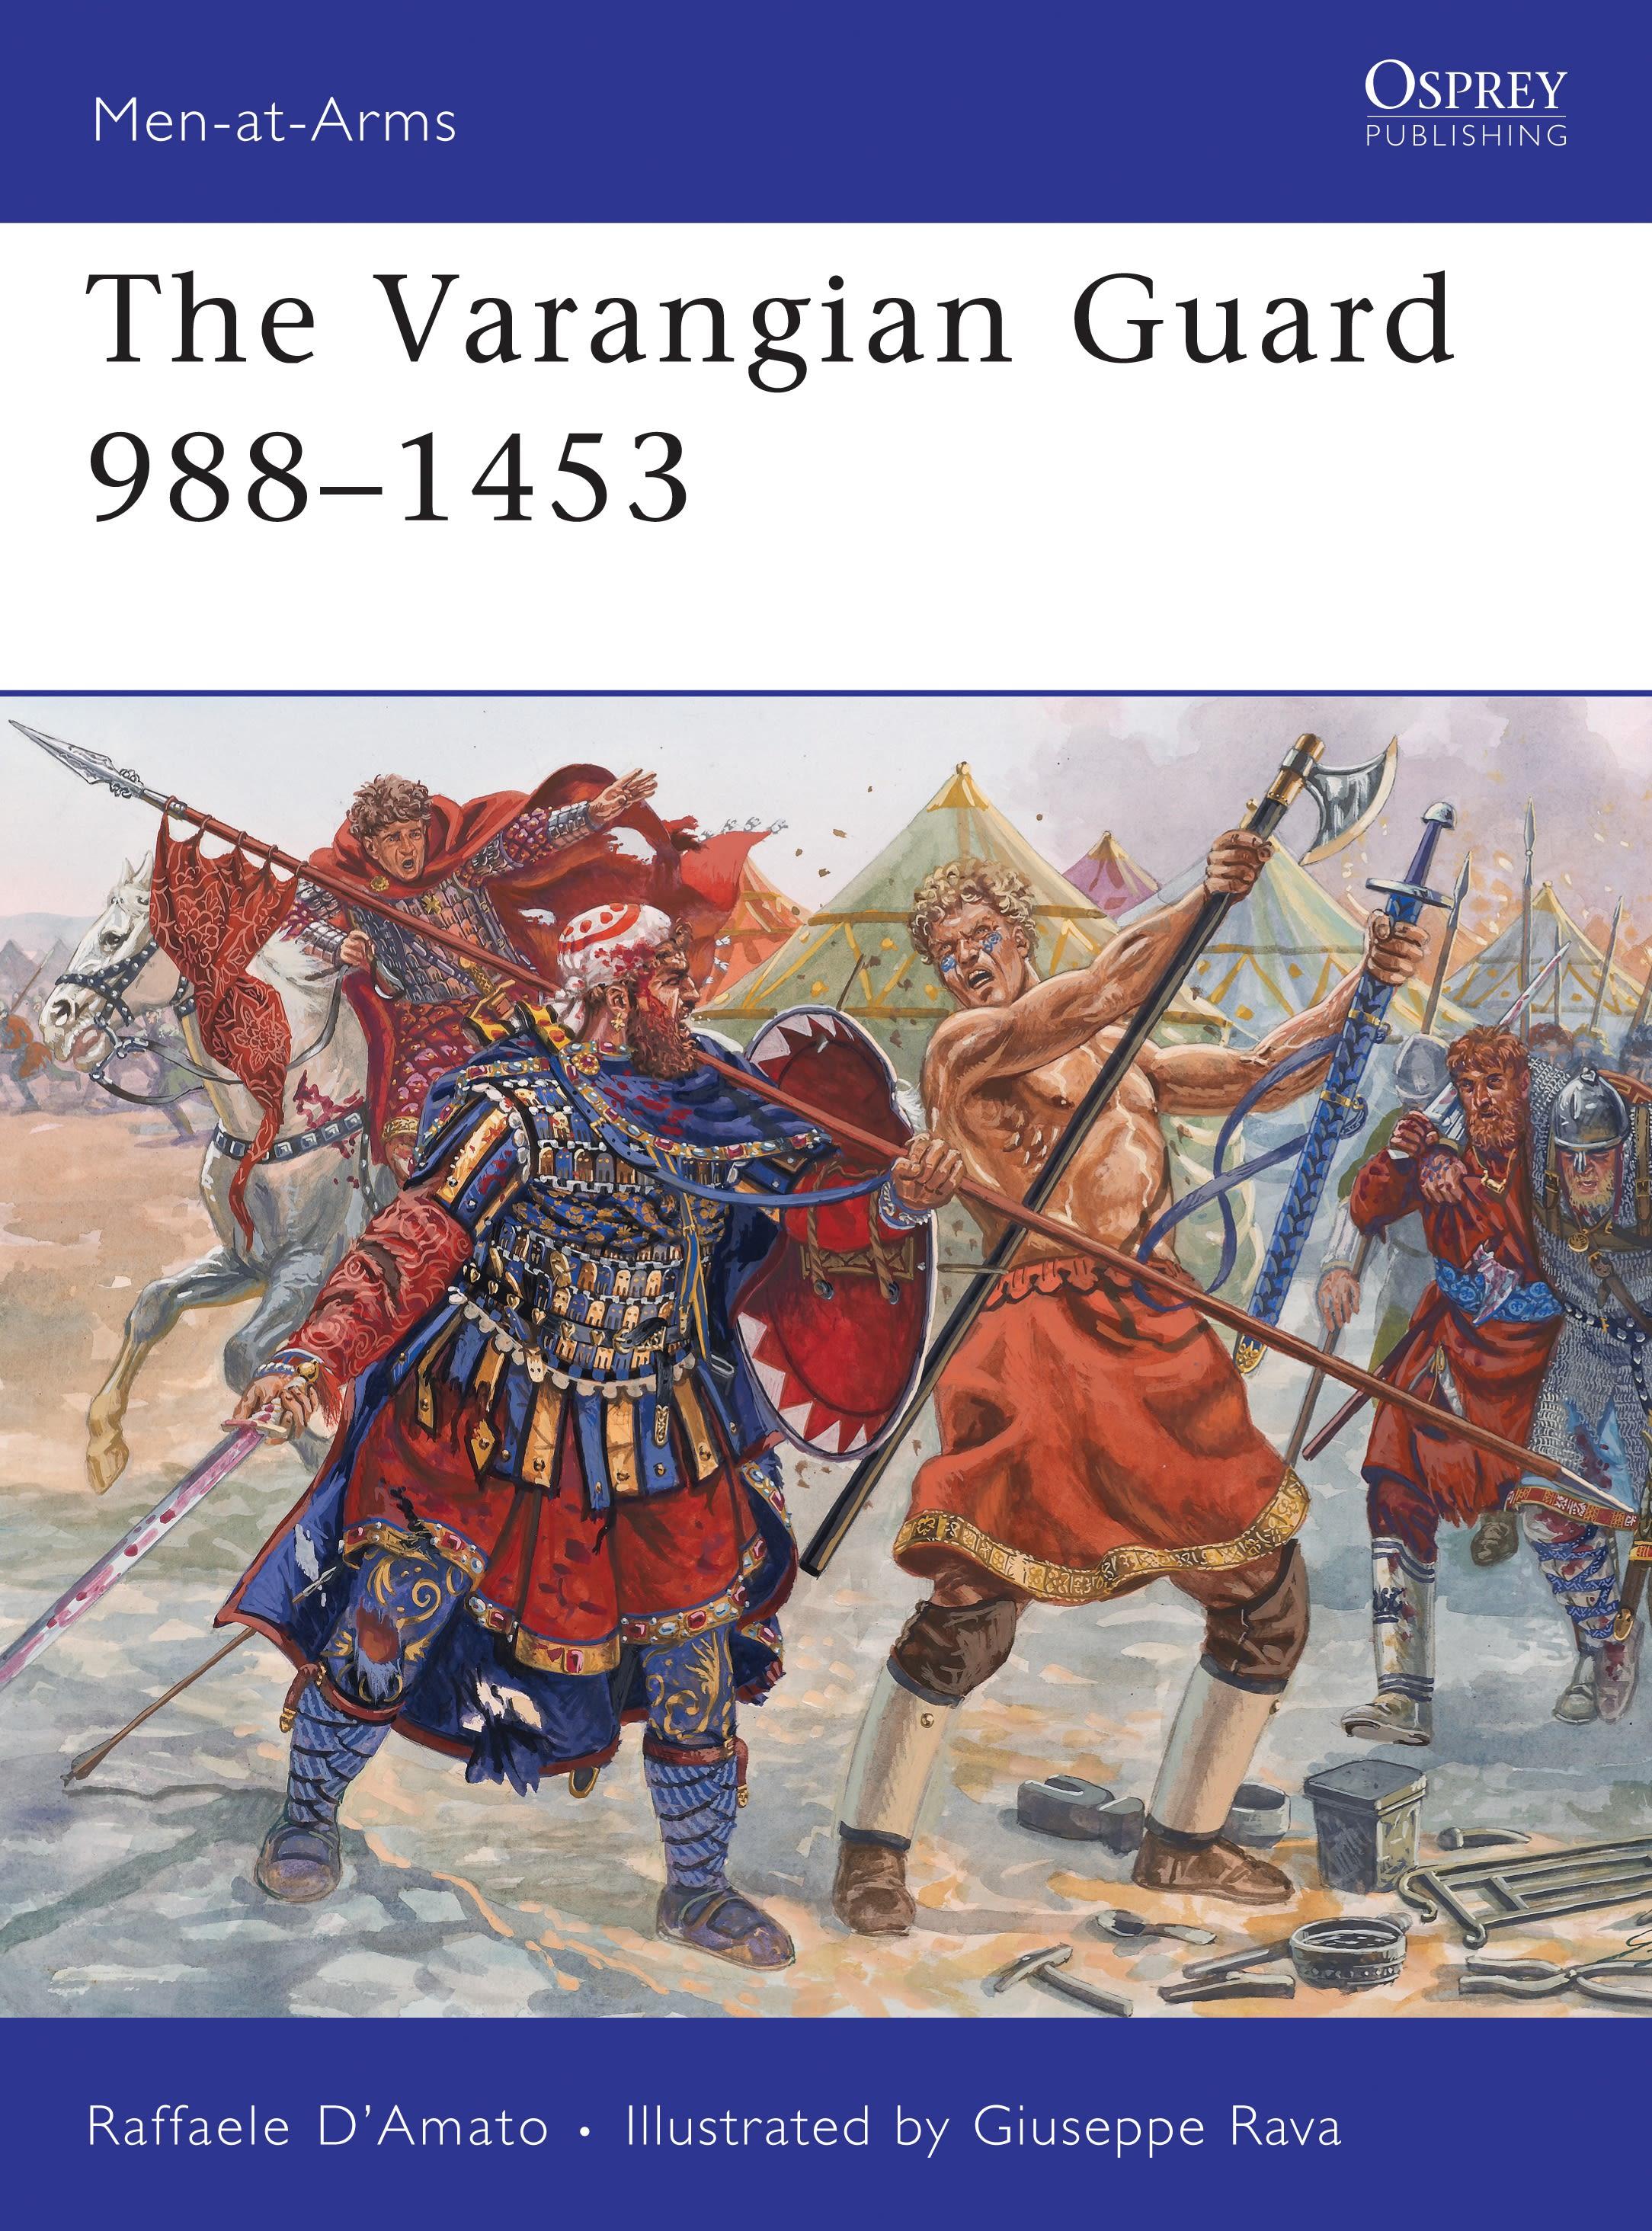 The Varangian Guard 988-1453 / Raffaele D'Amato / Taschenbuch / Men-At-Arms (Osprey) / Kartoniert / Broschiert / Englisch / 2010 / OSPREY PUB INC / EAN 9781849081795 - D'Amato, Raffaele